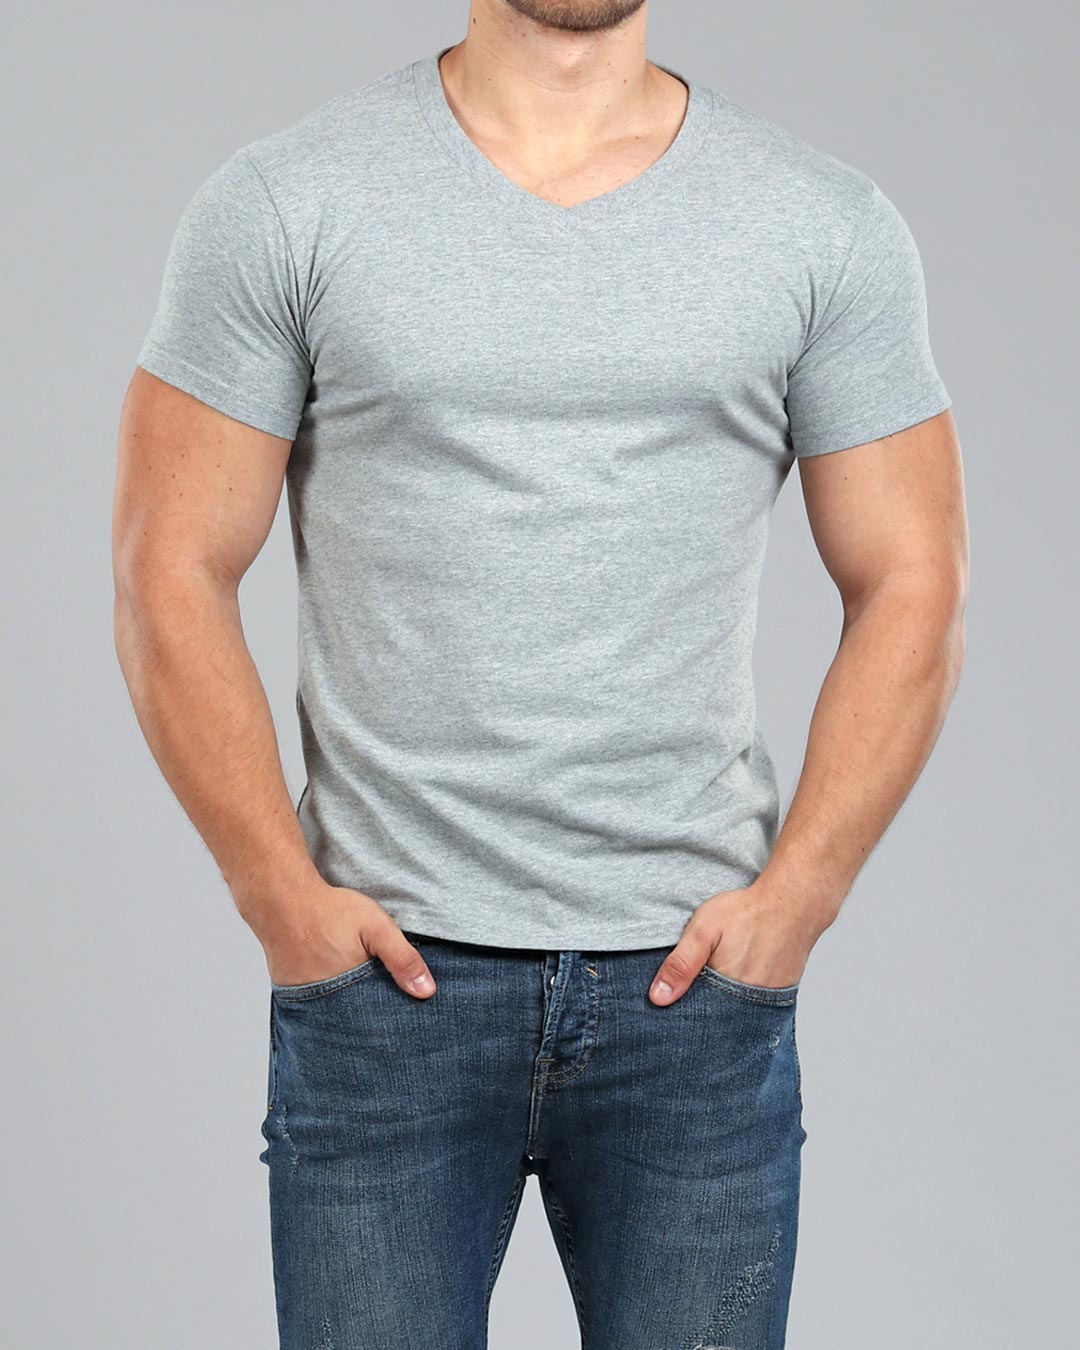 V-Neck Basic Muscle Fitted Plain T-Shirt - Light Grey